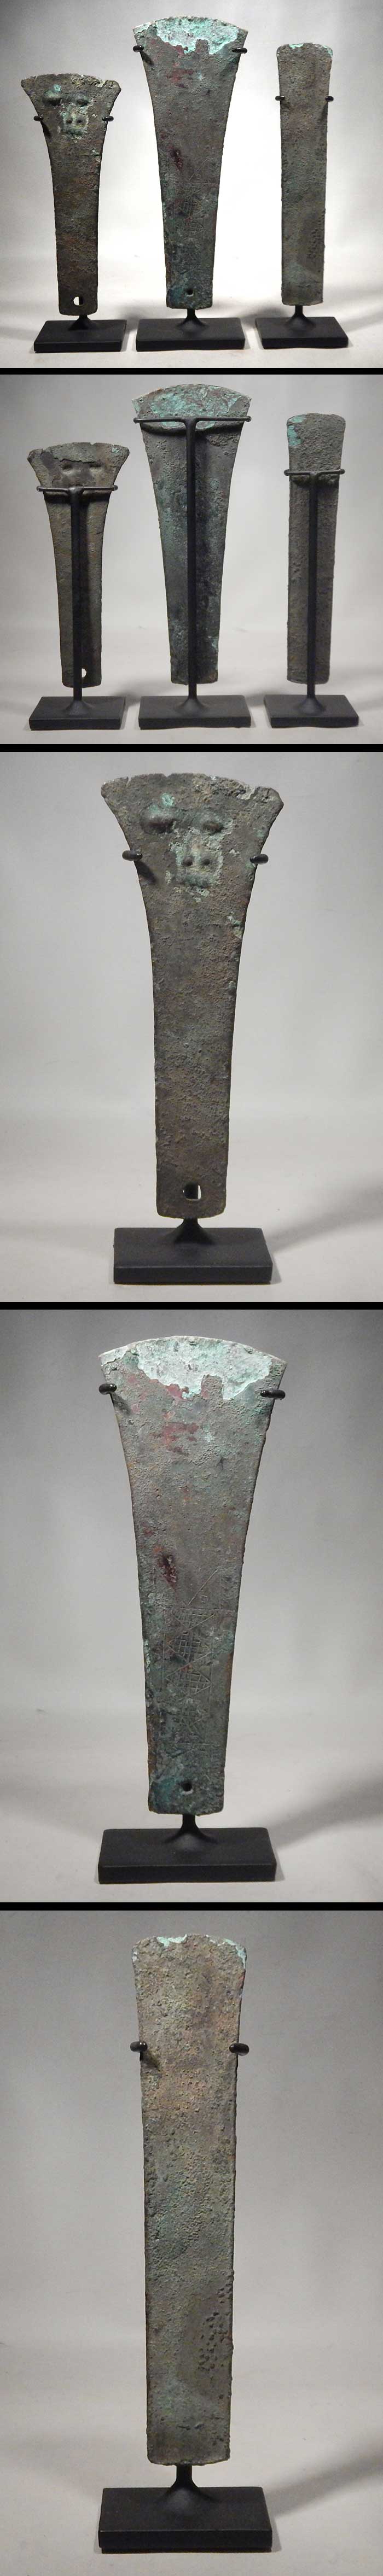 Pre-Columbian Peruvian Peru Tumi Ceremonial Copper Bronze Knives Blades